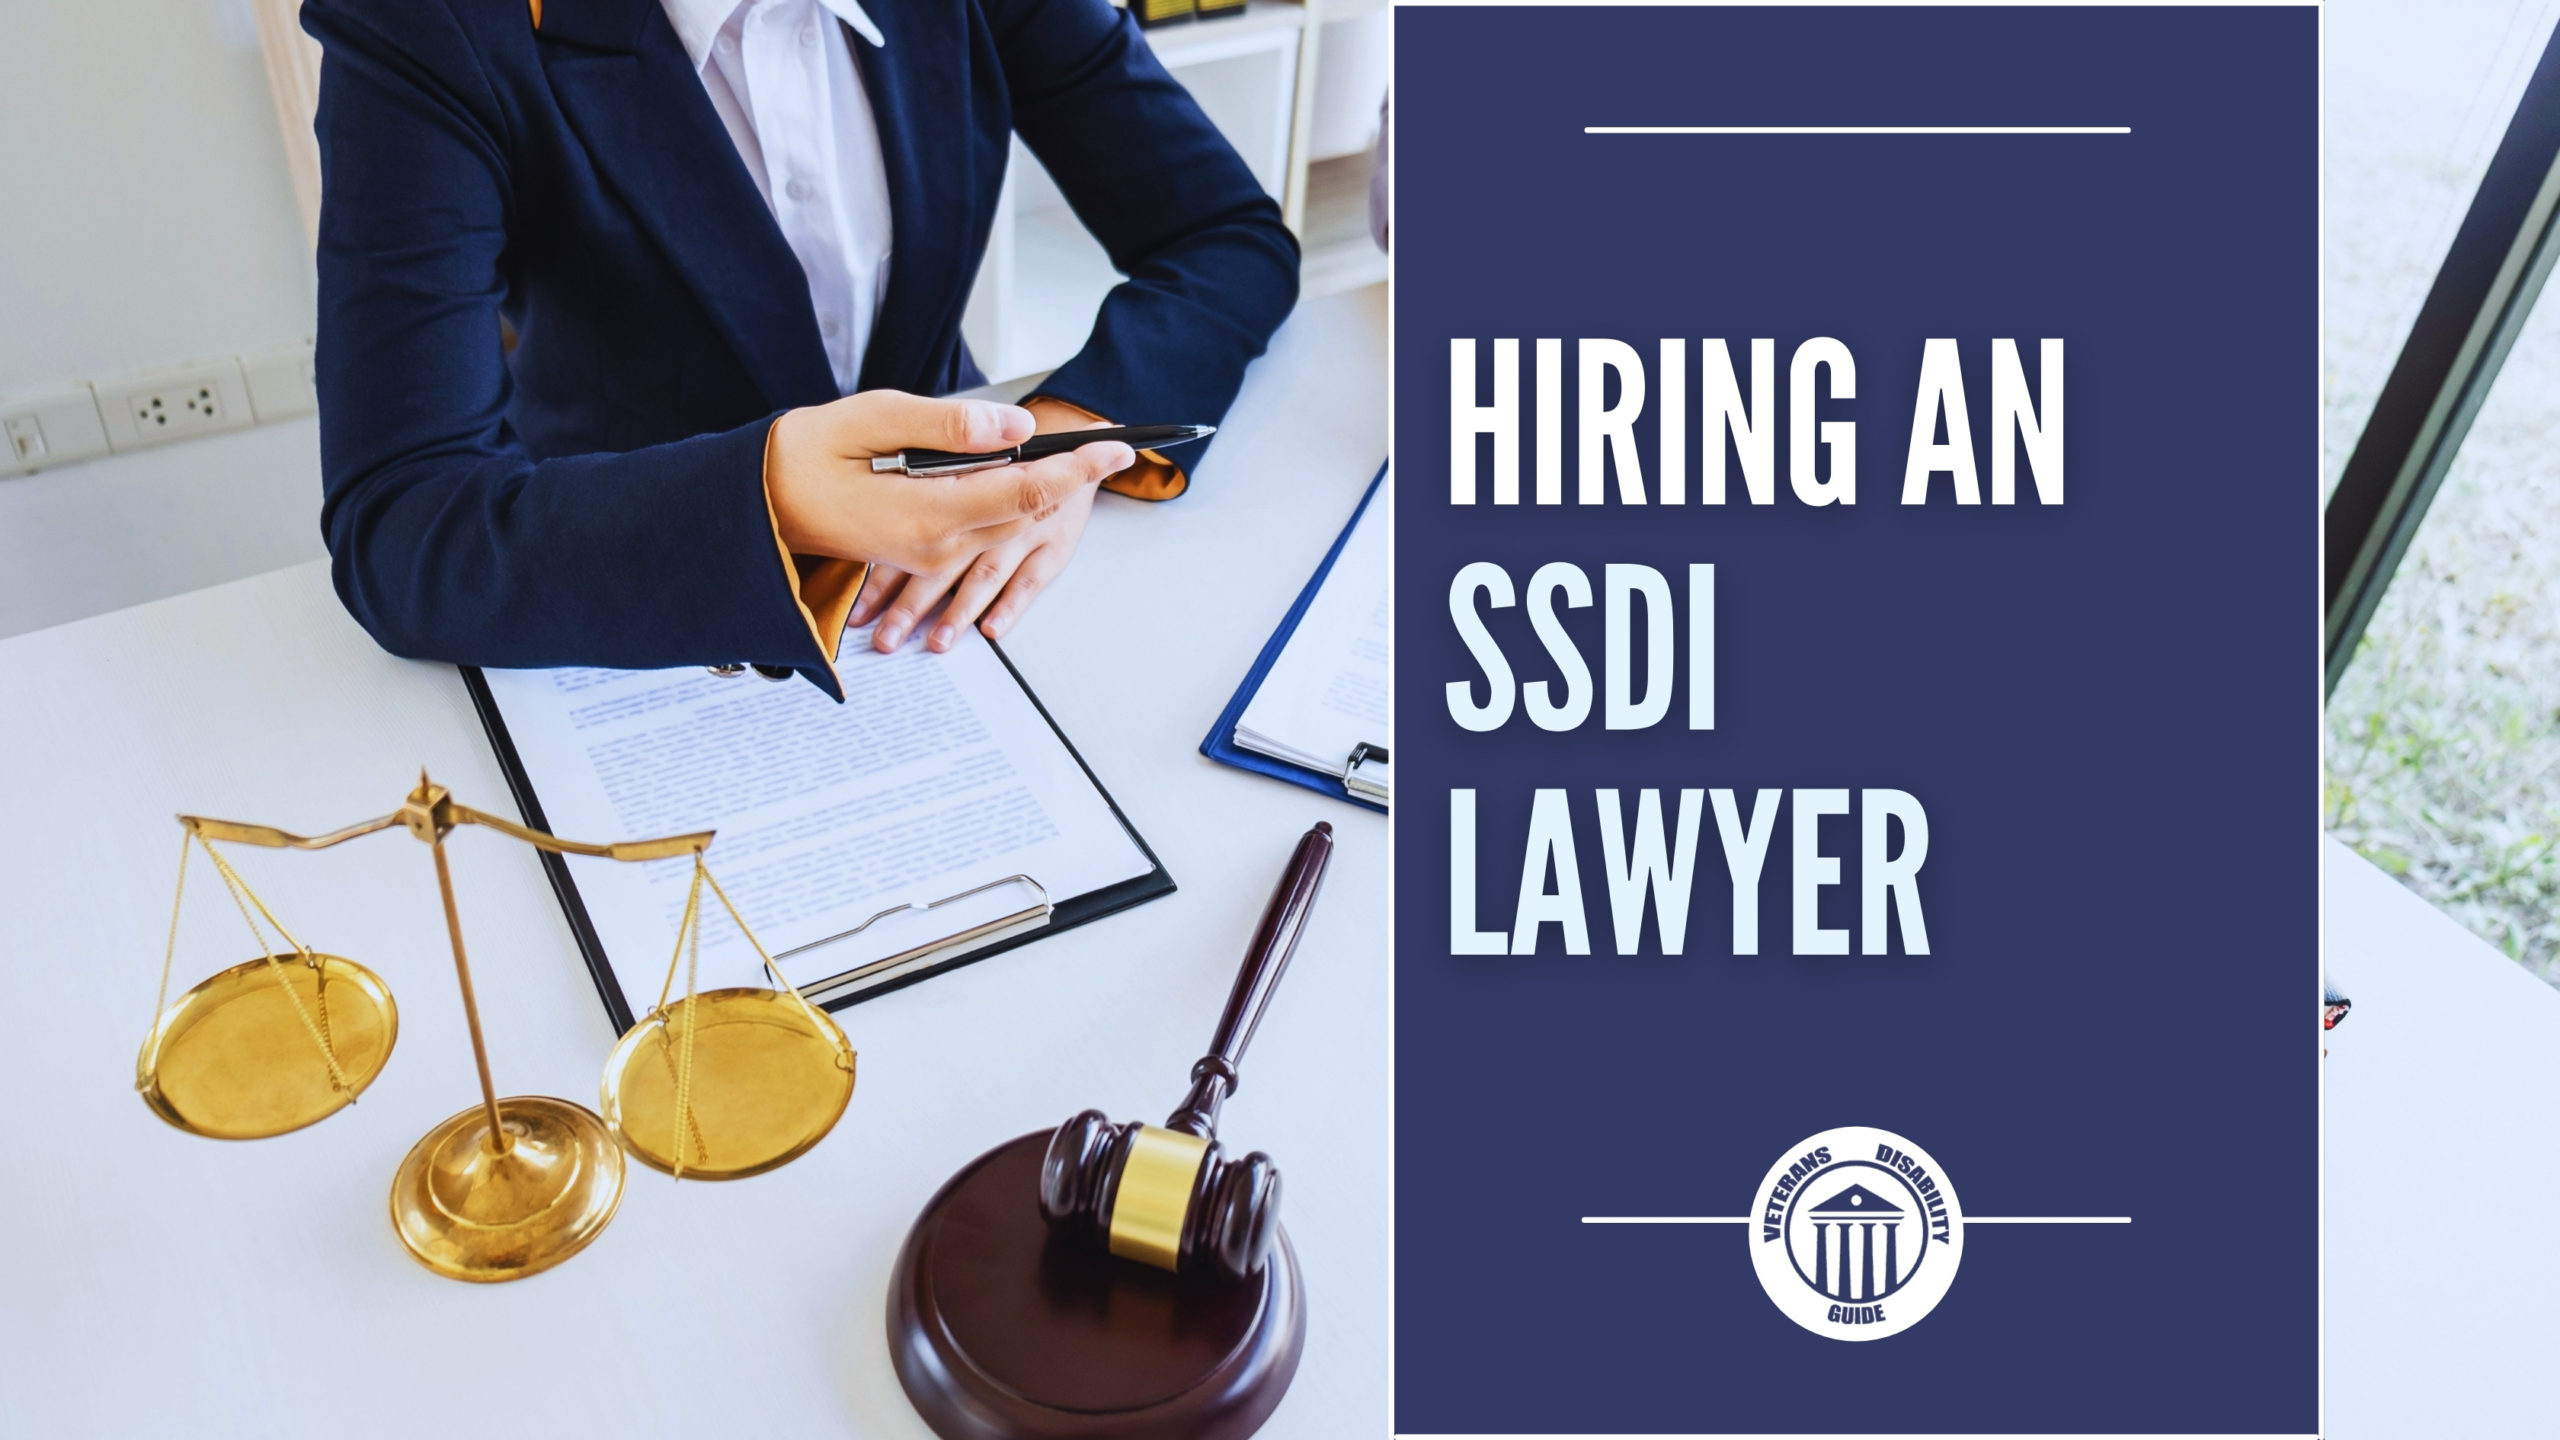 Hiring an SSDI Lawyer blog header image